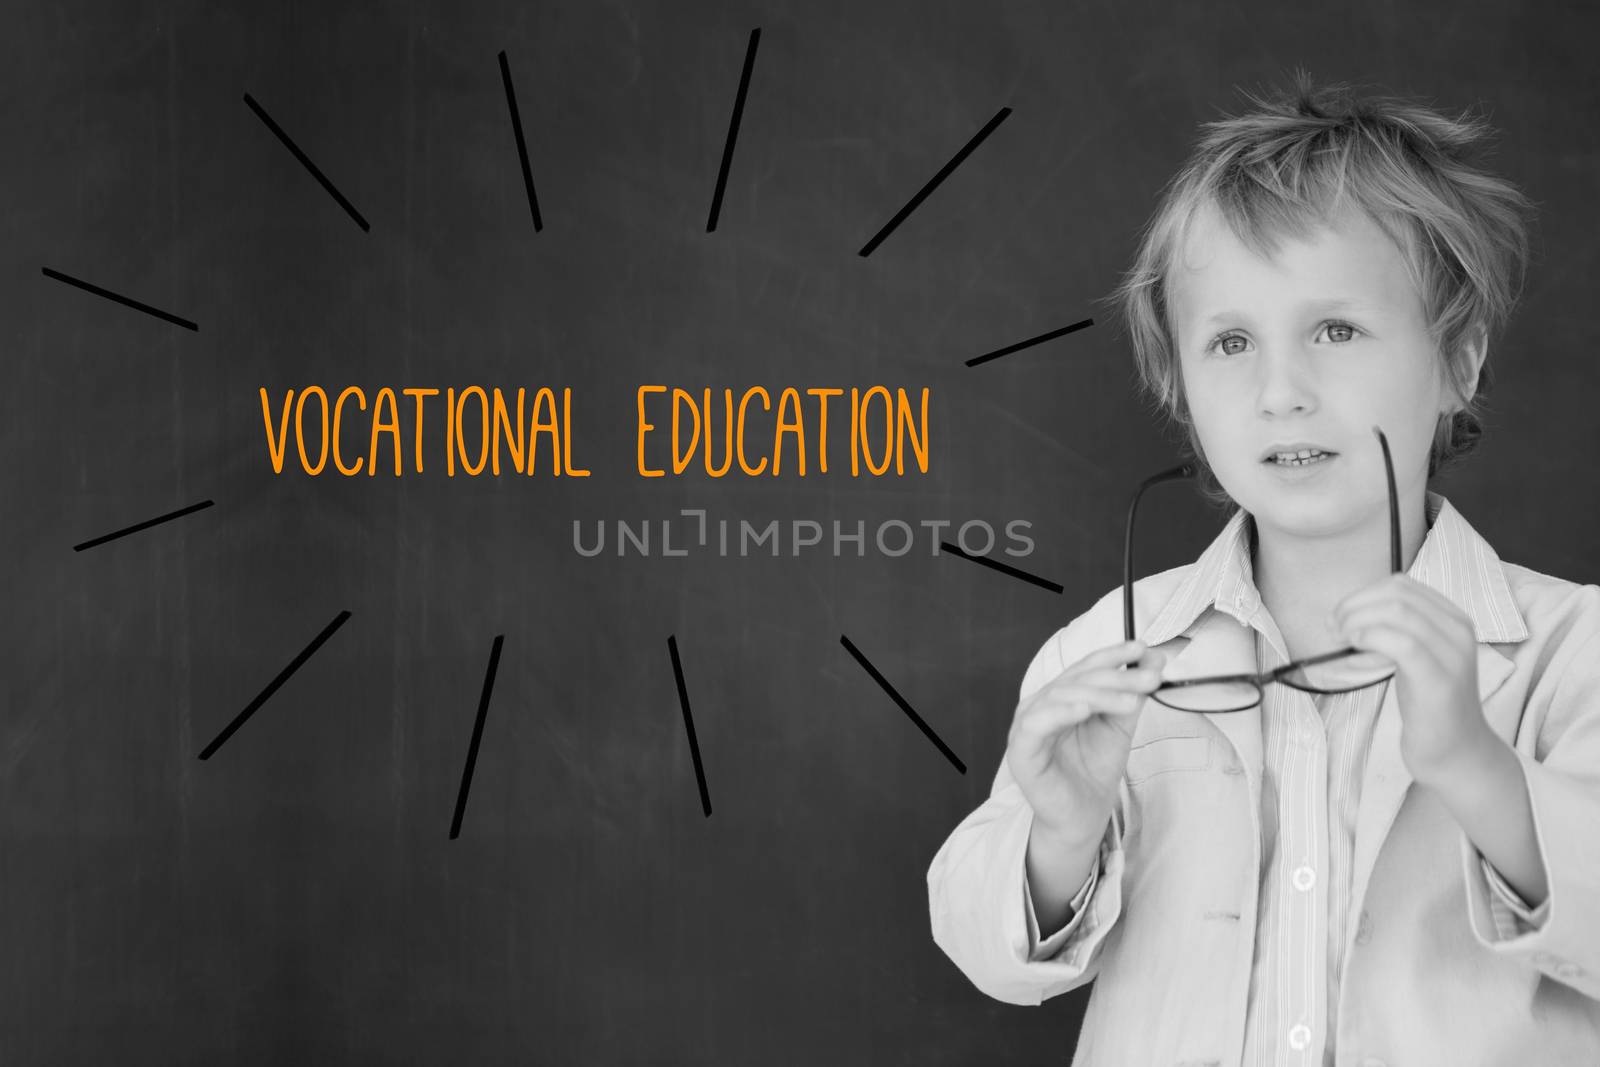 Vocational education against schoolboy and blackboard by Wavebreakmedia